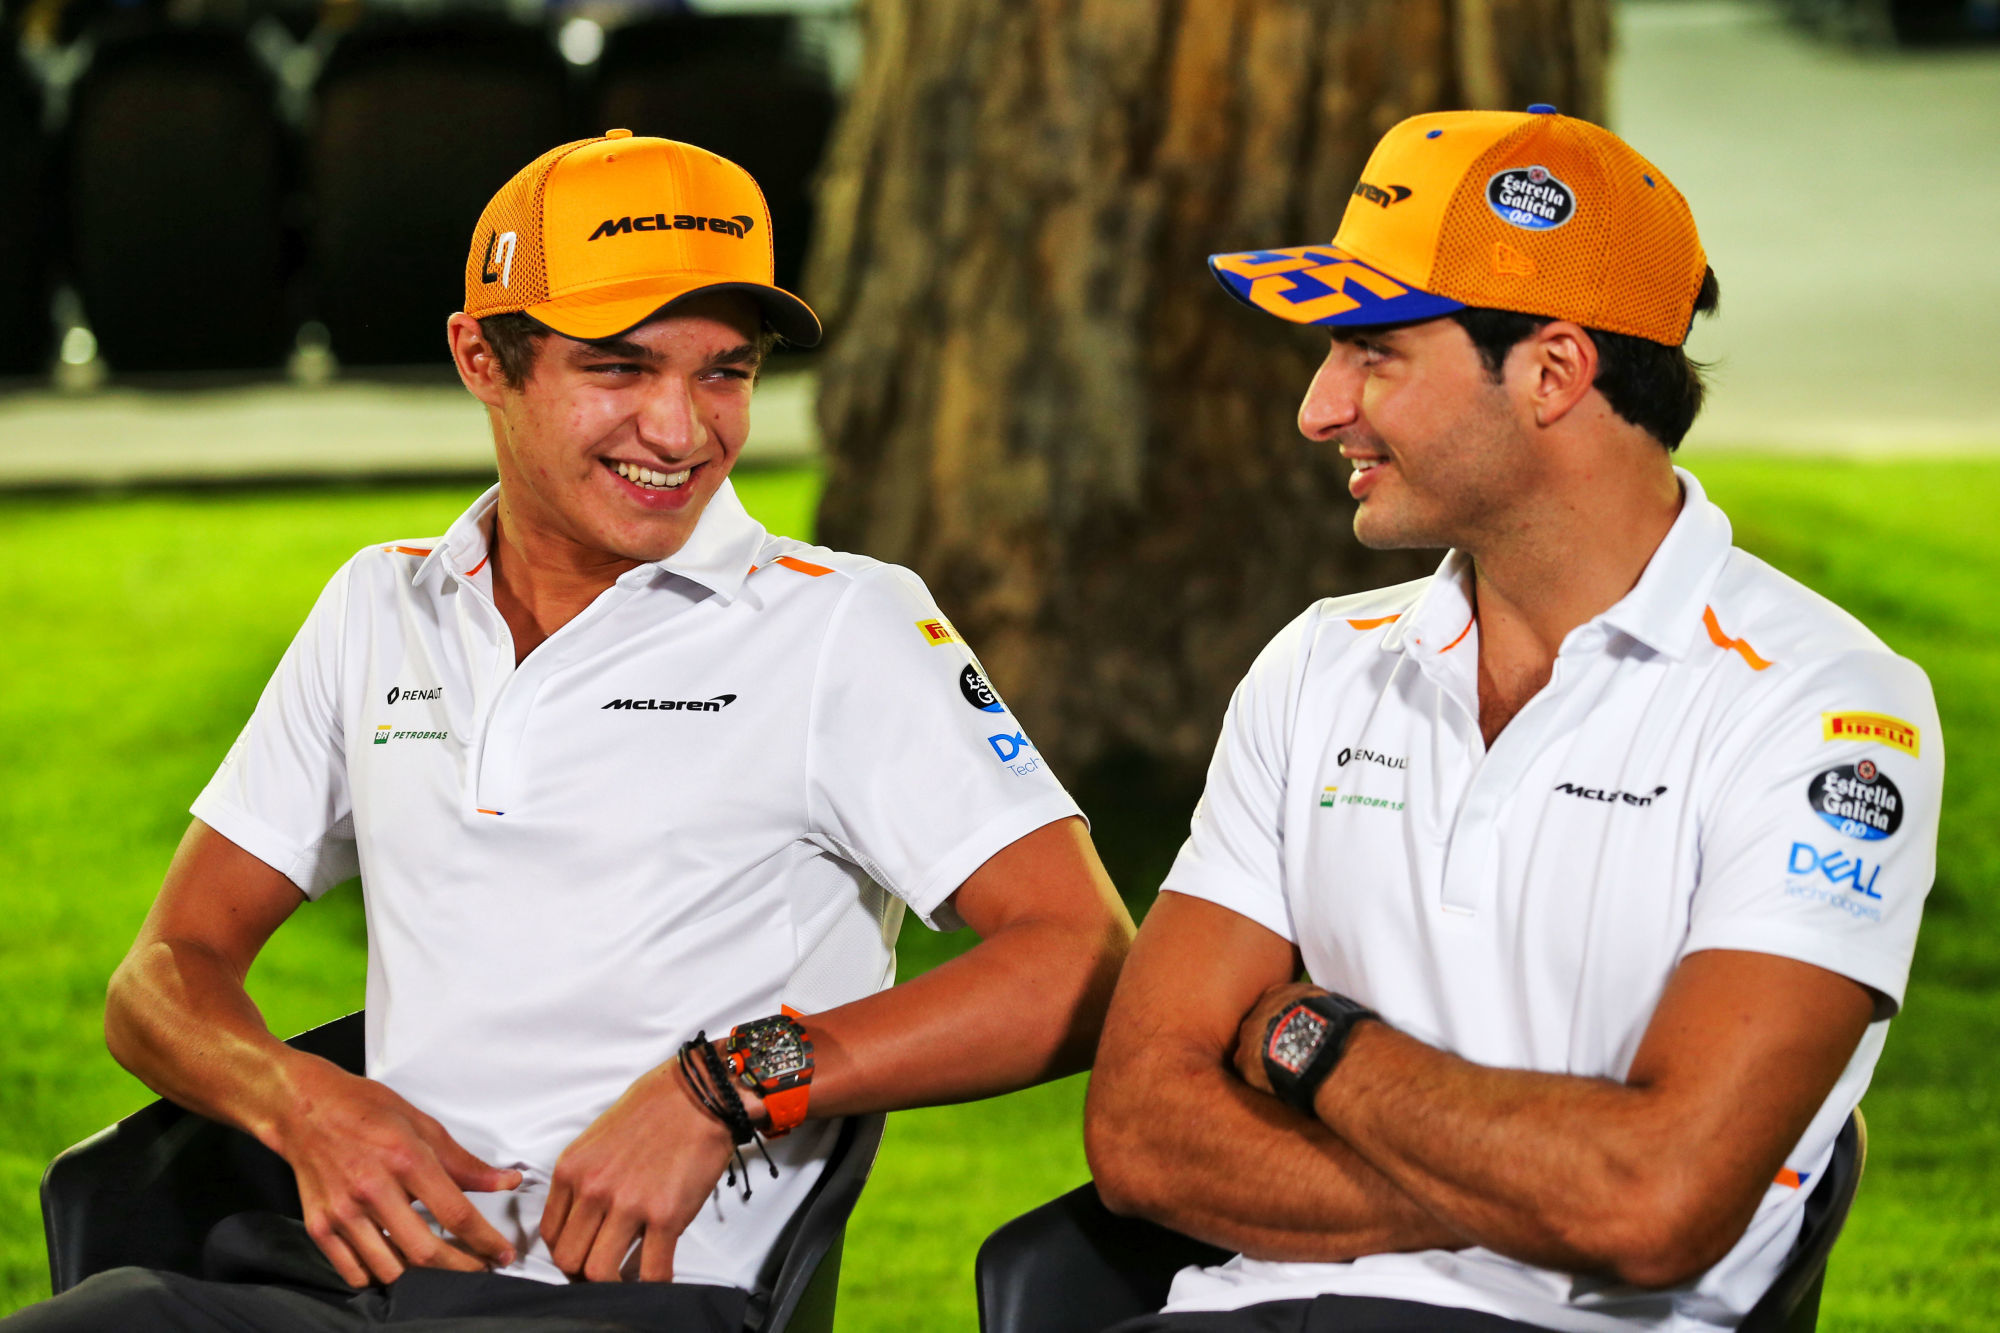 Lando Norris - McLaren et Carlos Sainz Jr - McLaren.
Photo by Icon Sport